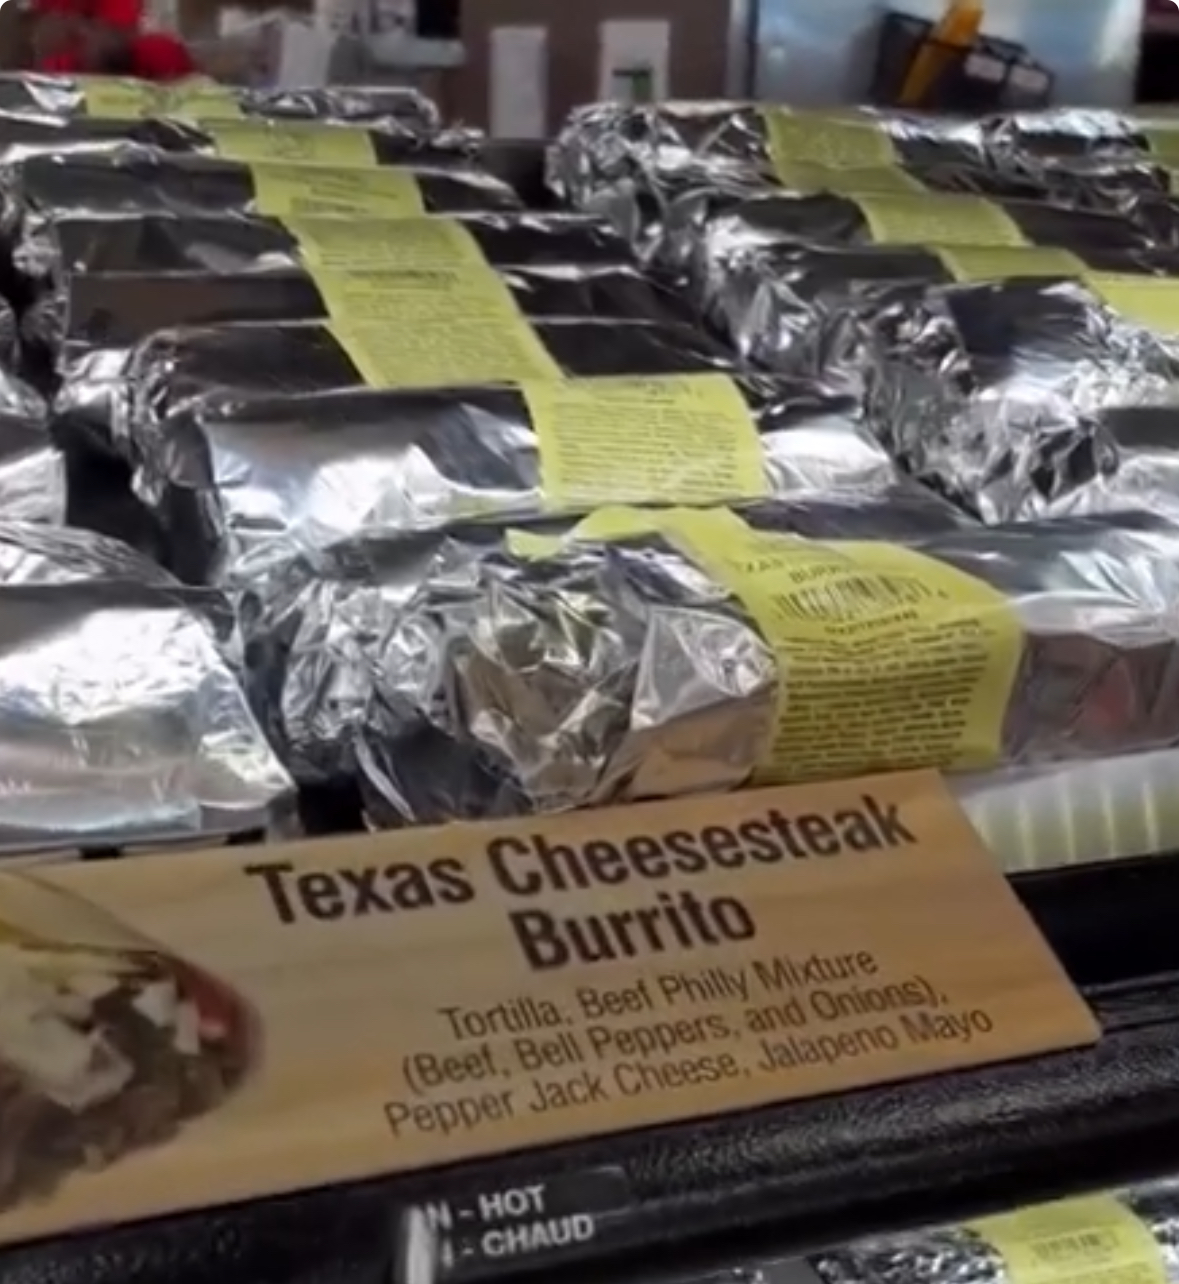 Texas Cheesesteak Burrito from Buc-ee's